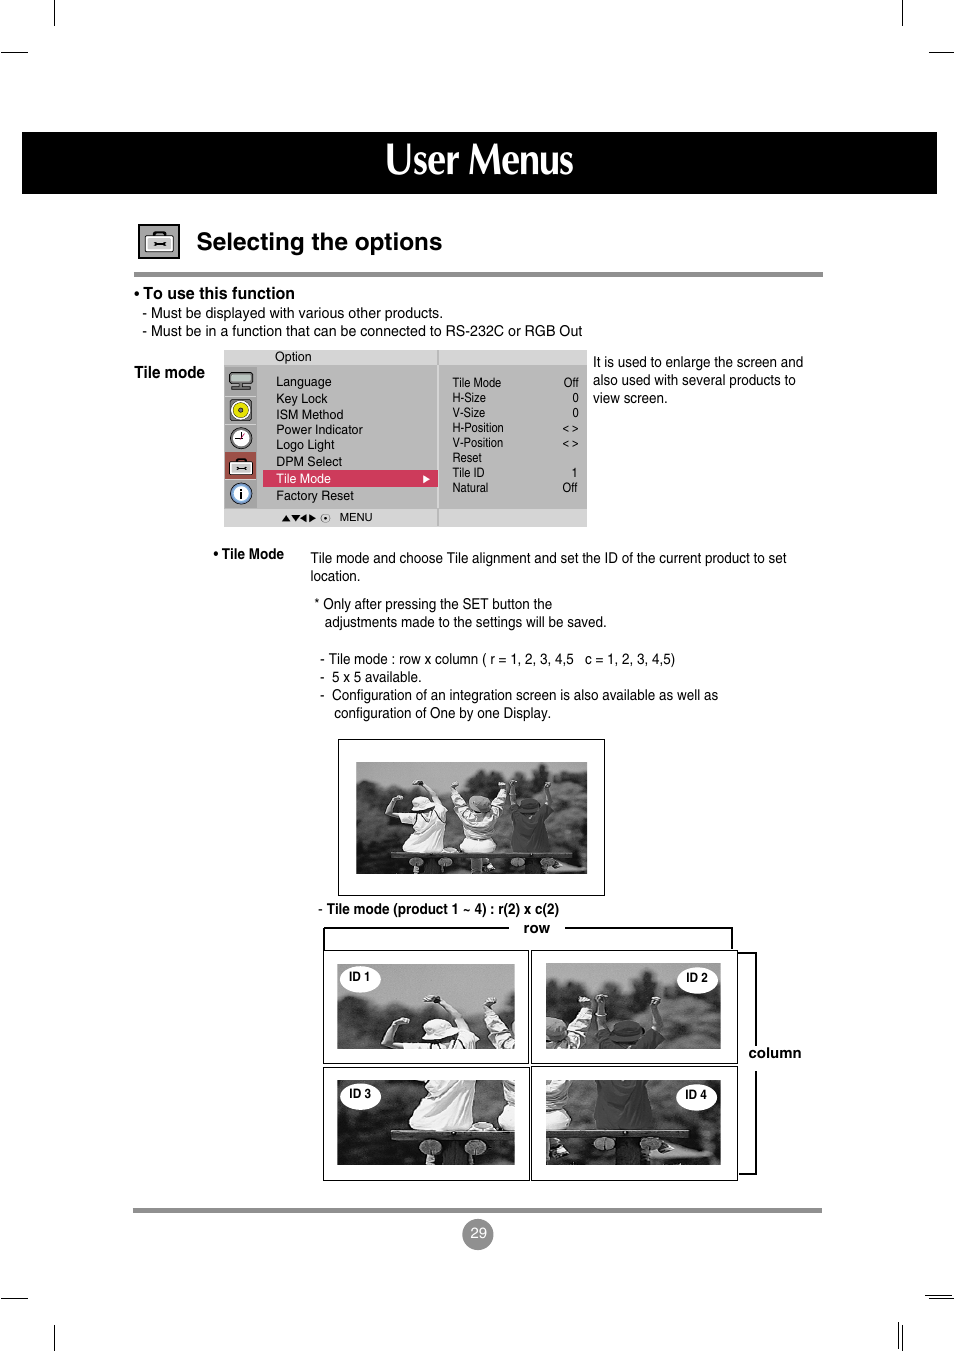 User menus, Selecting the options | LG M3202C-BA User Manual | Page 30 / 68